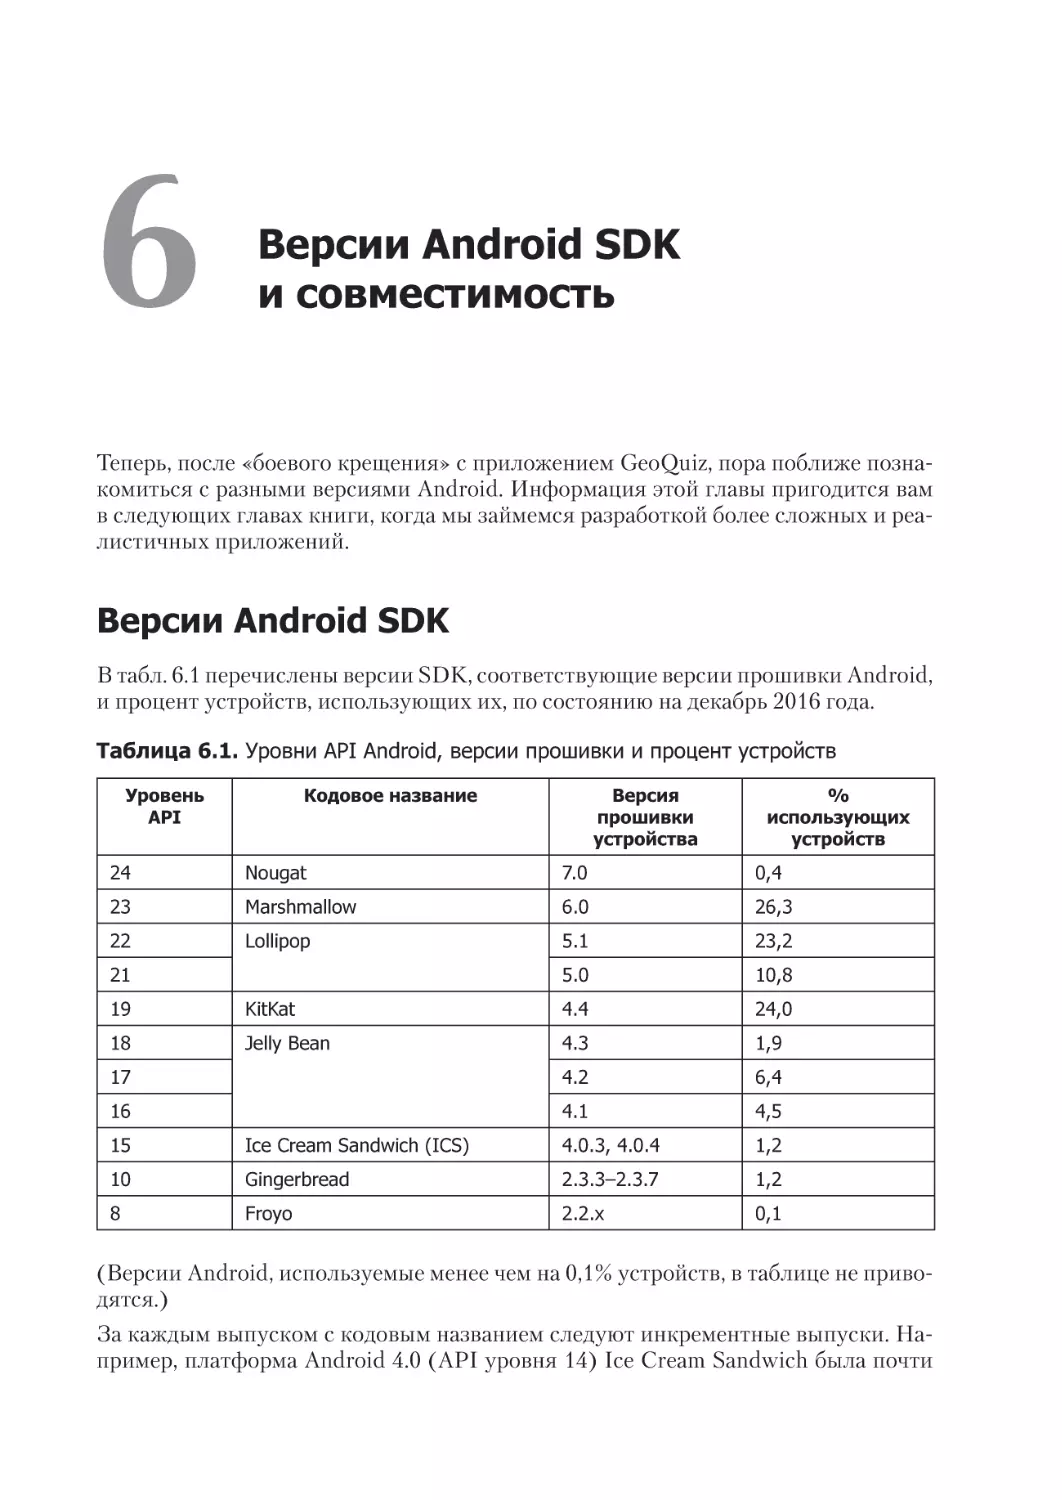 Глава 6. Версии Android SDK и совместимость
Версии Android SDK